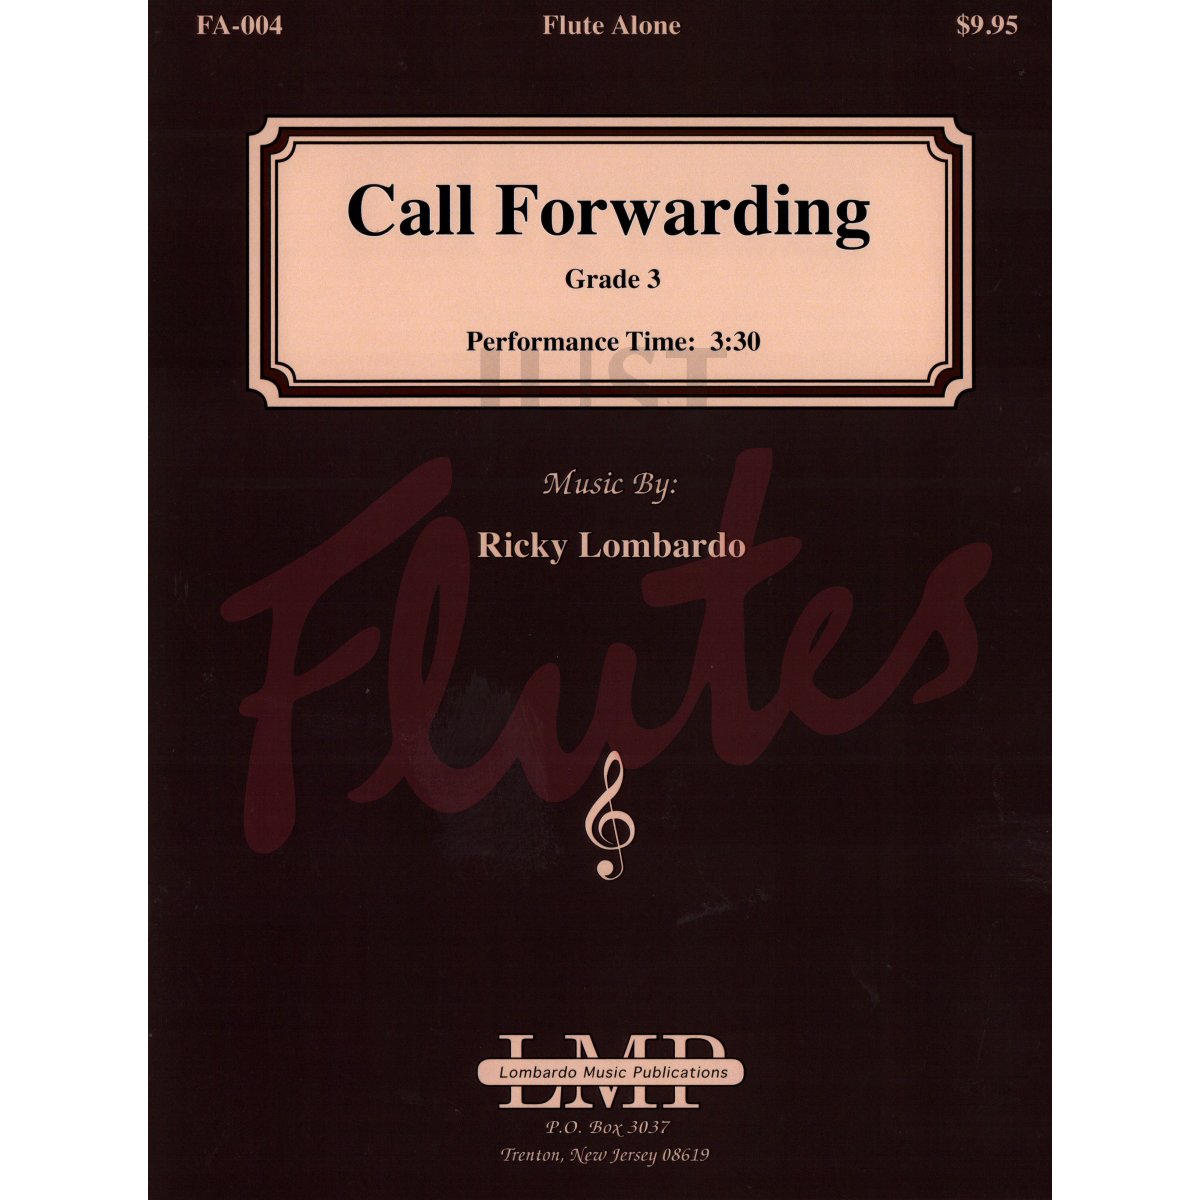 Call Forwarding for Flute Alone